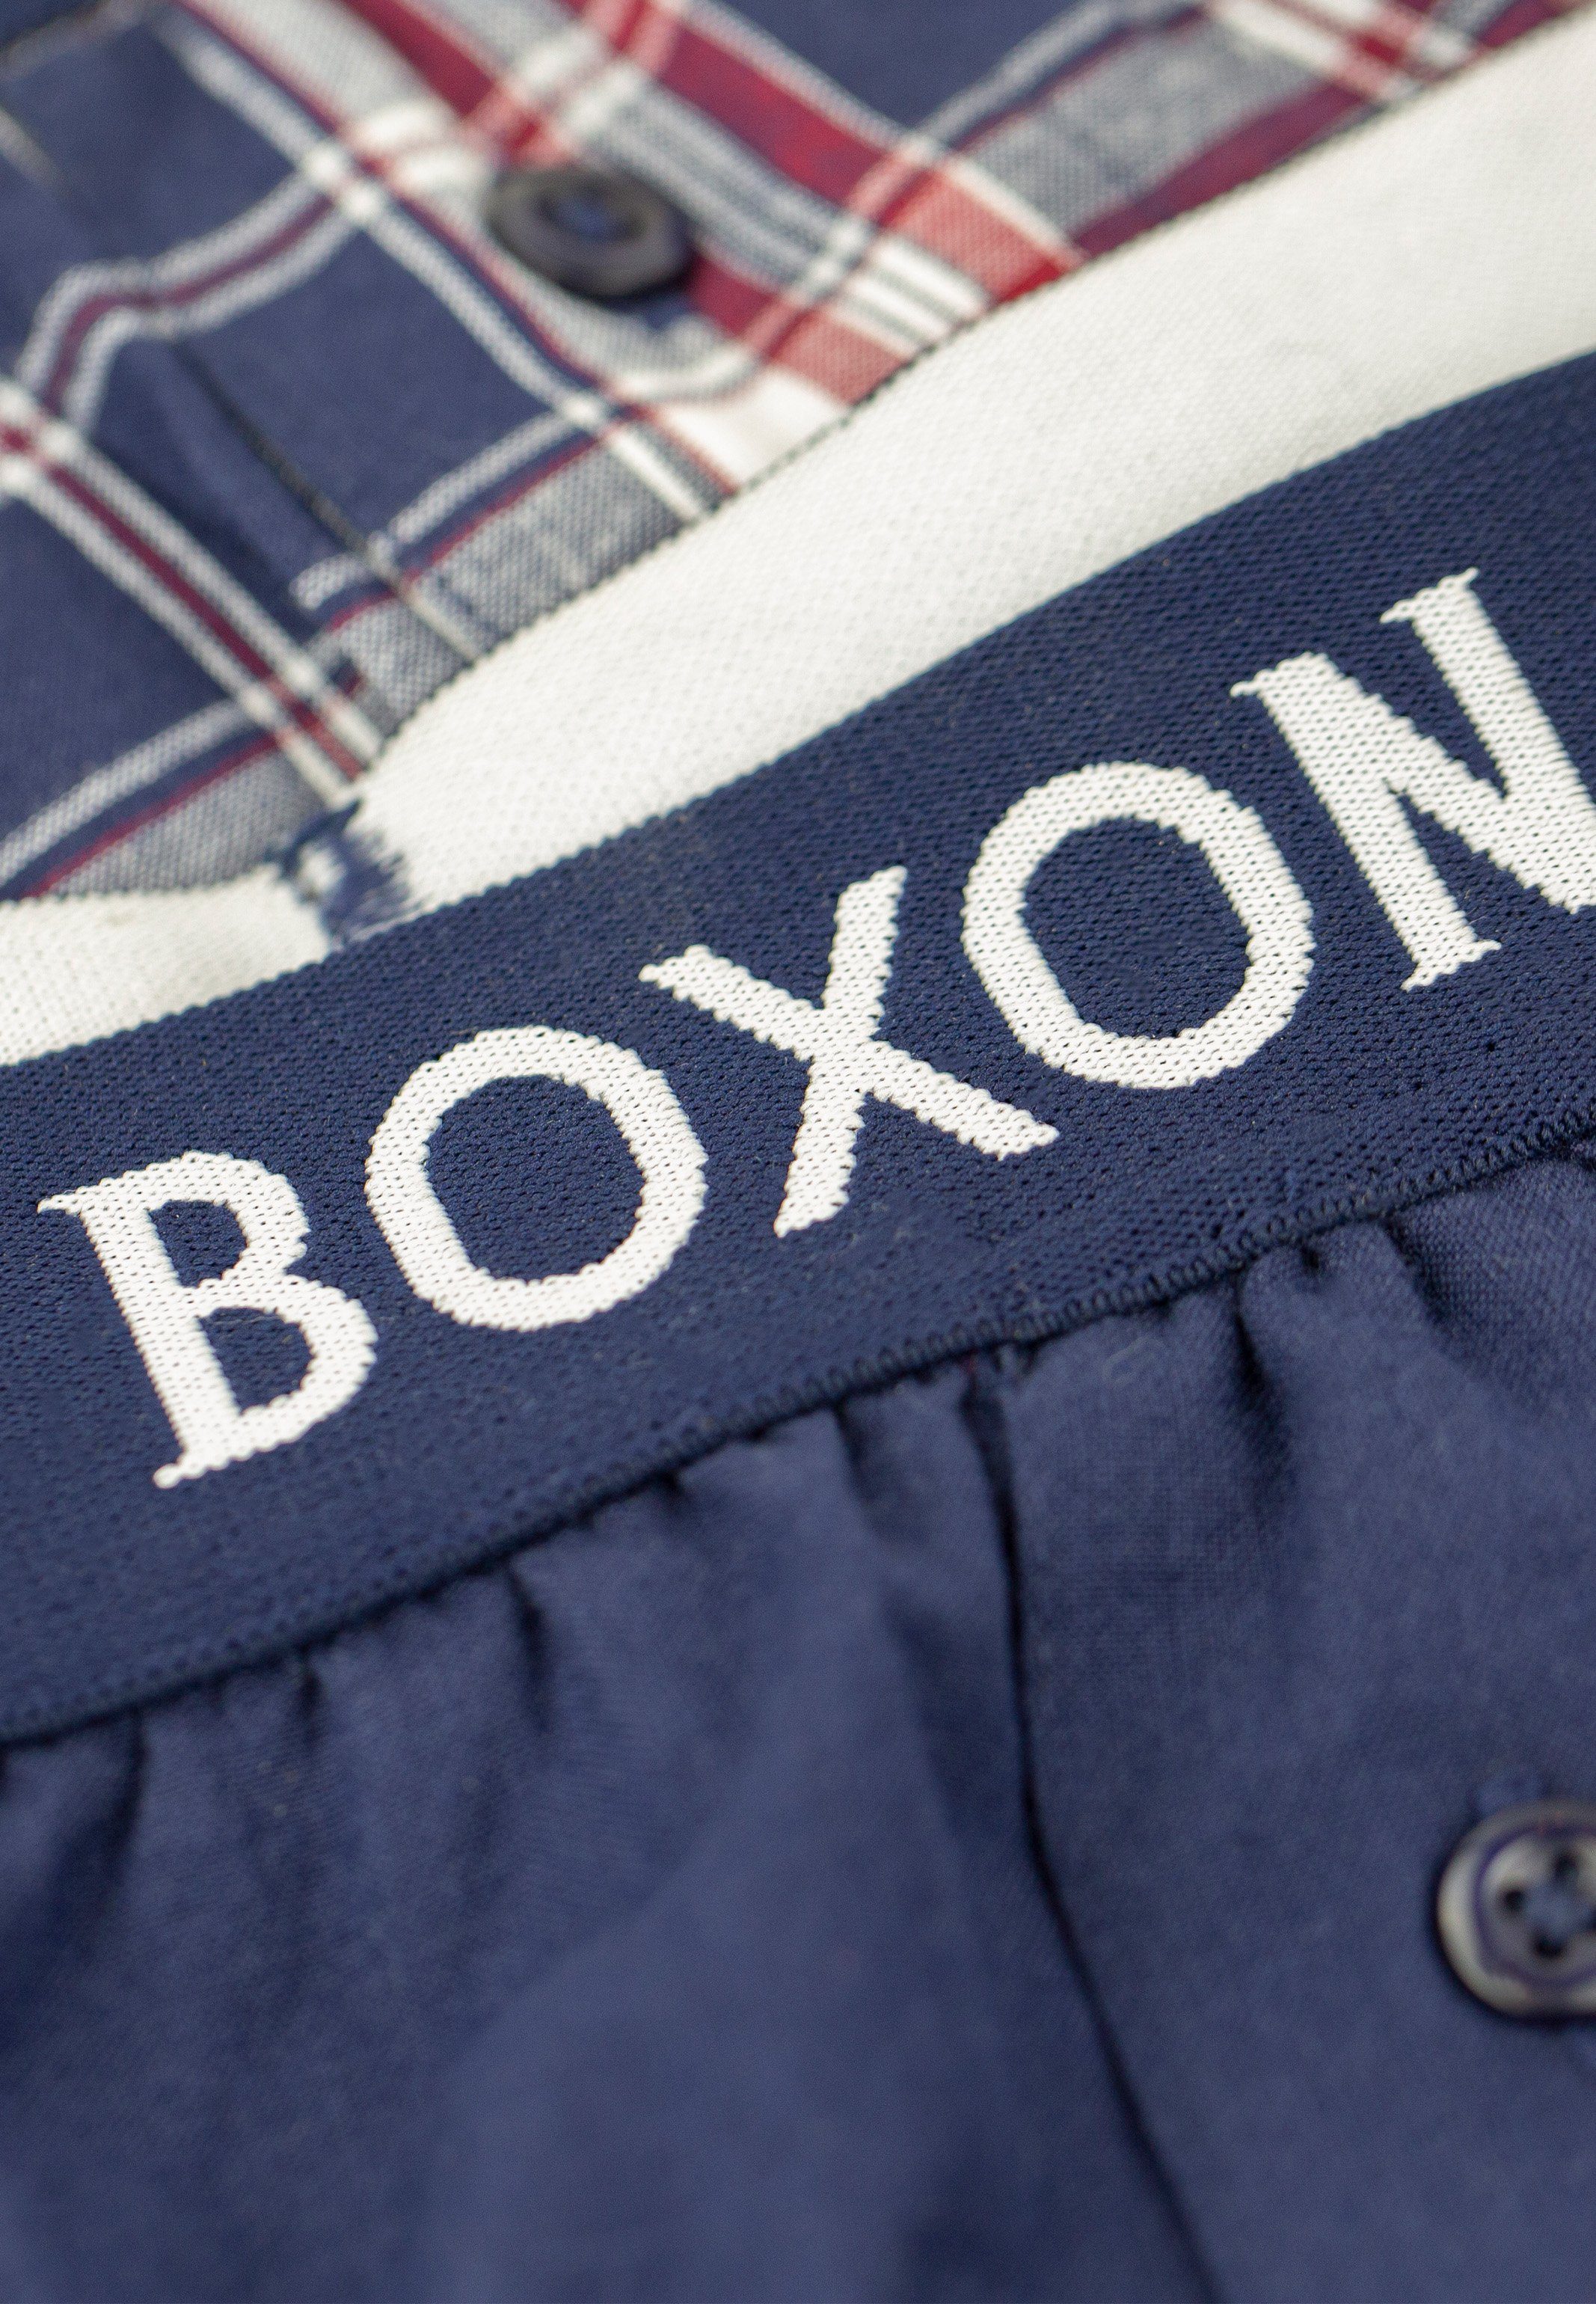 BOXON Boxershorts Softer Web - Blau Baumwolle - Mit - Eingriff 3er Gummibund Boxershorts (Spar-Set, Pack 3-St)